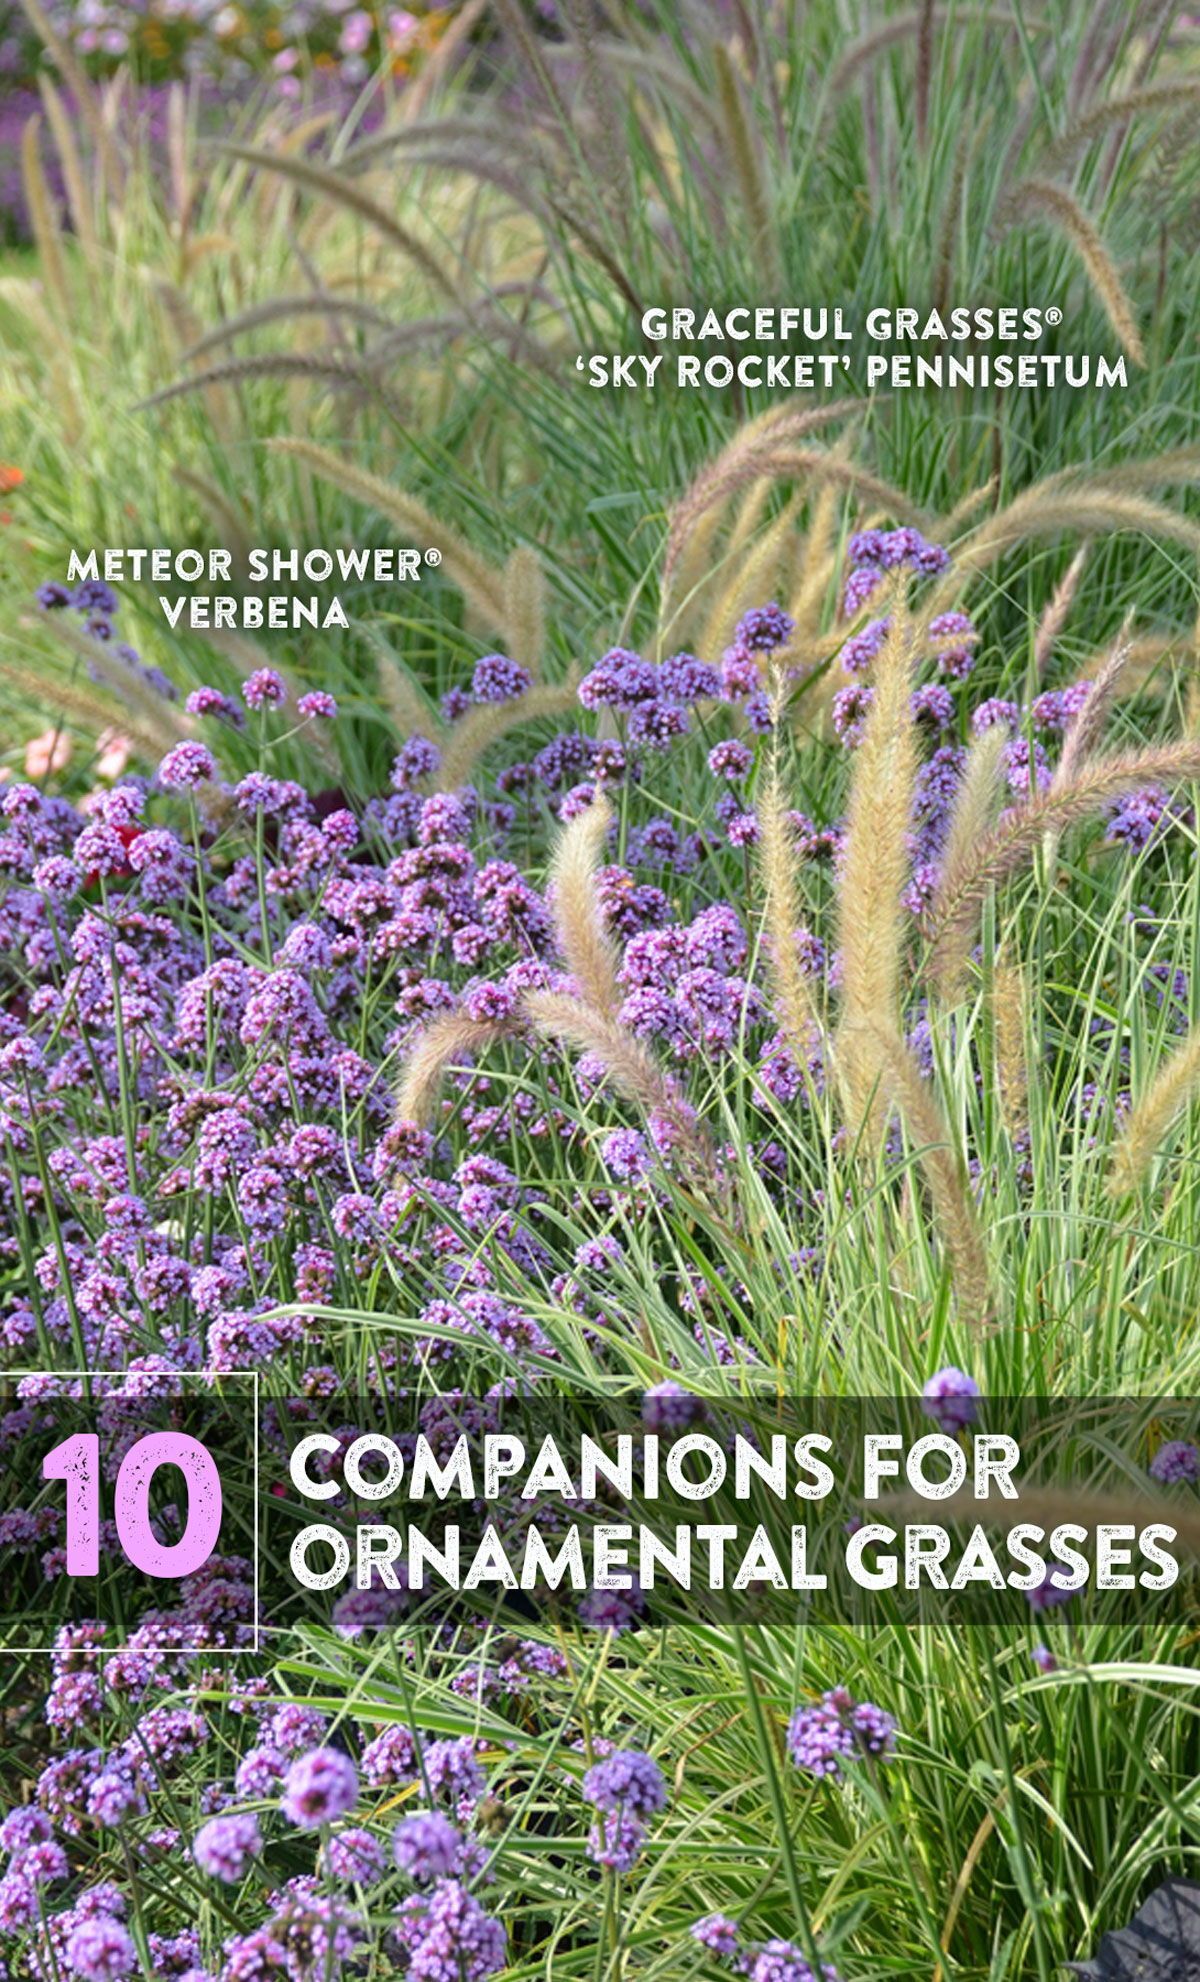 18 plants Outdoor grasses ideas